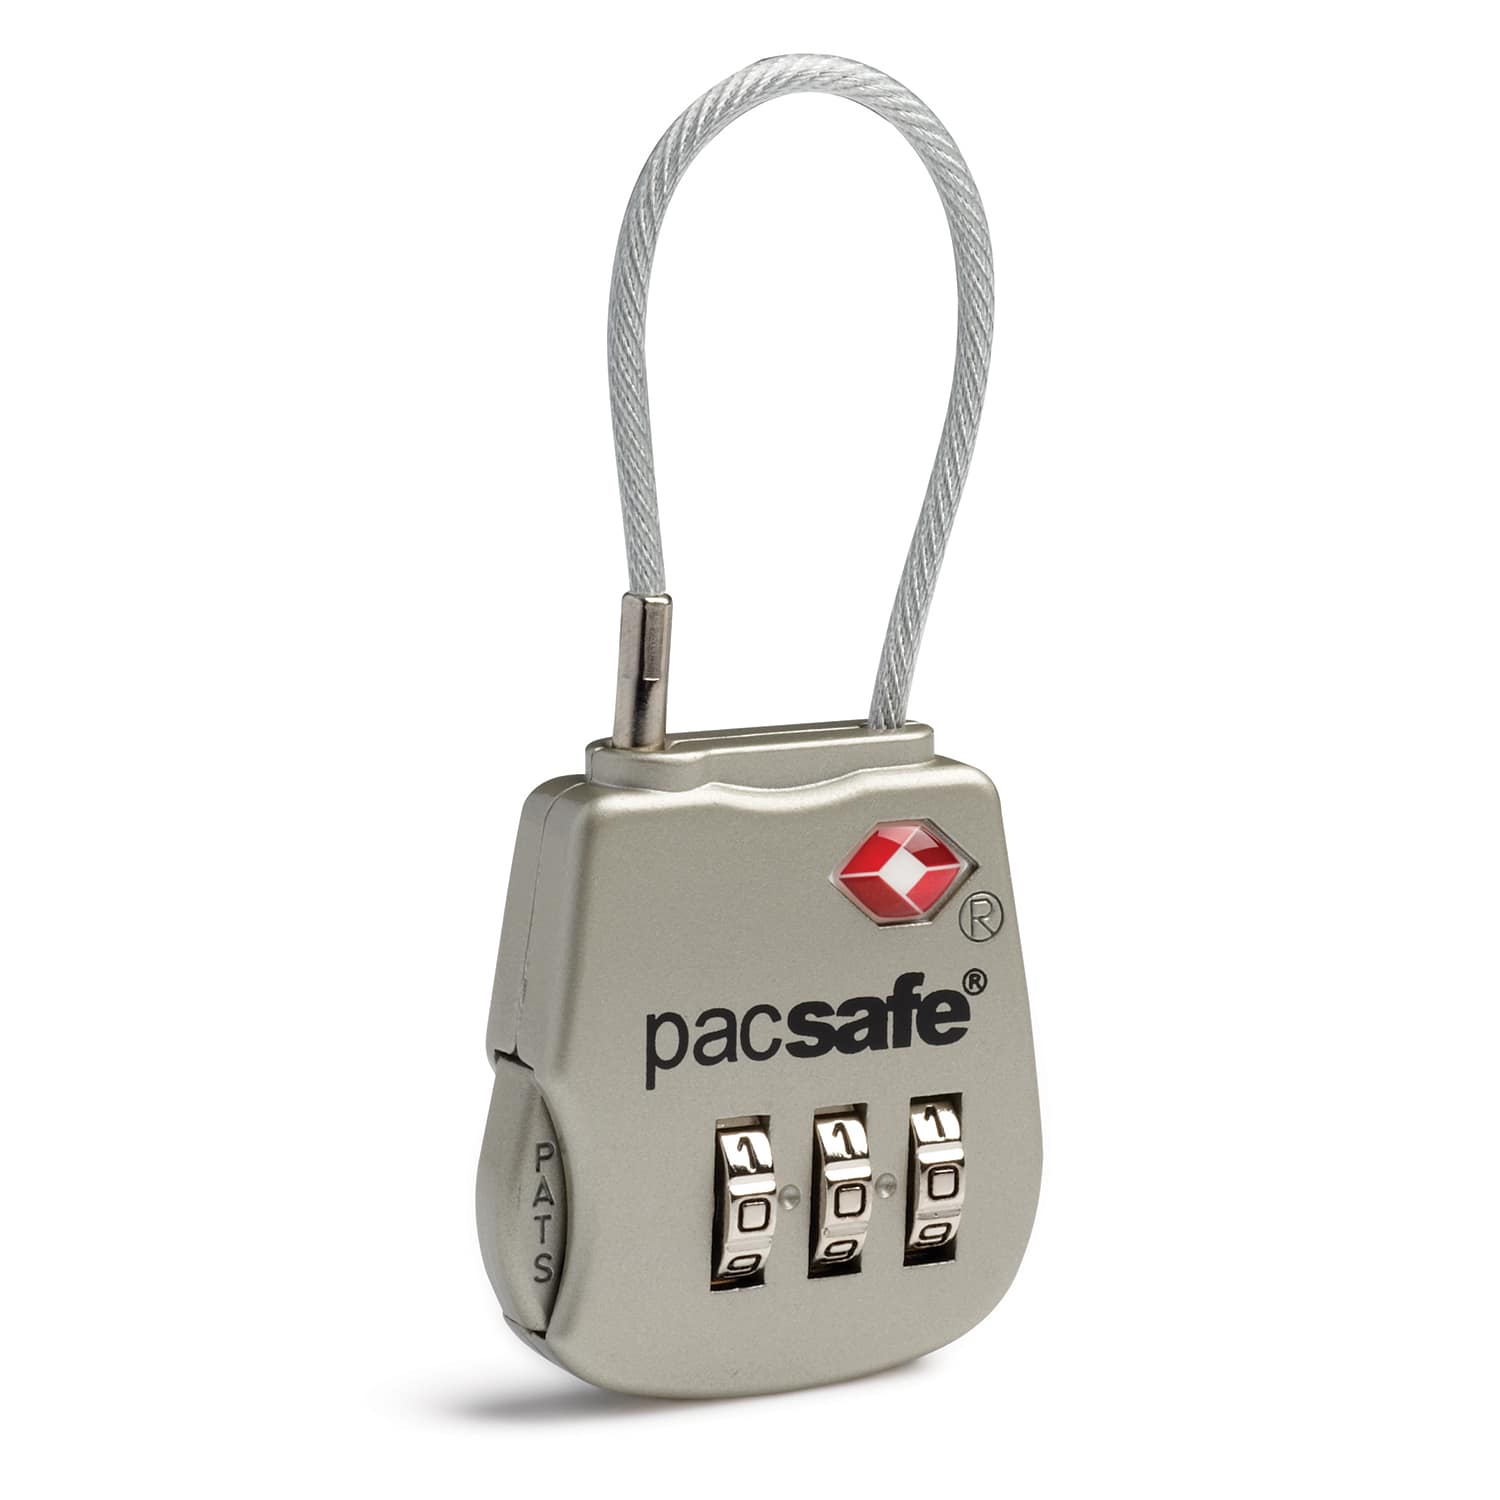 TSA Luggage Locks (2 Pack) - 4 Digit Combination Steel Padlocks - Approved  Travel Lock for Suitcases & Baggage - TSA Lock - Black